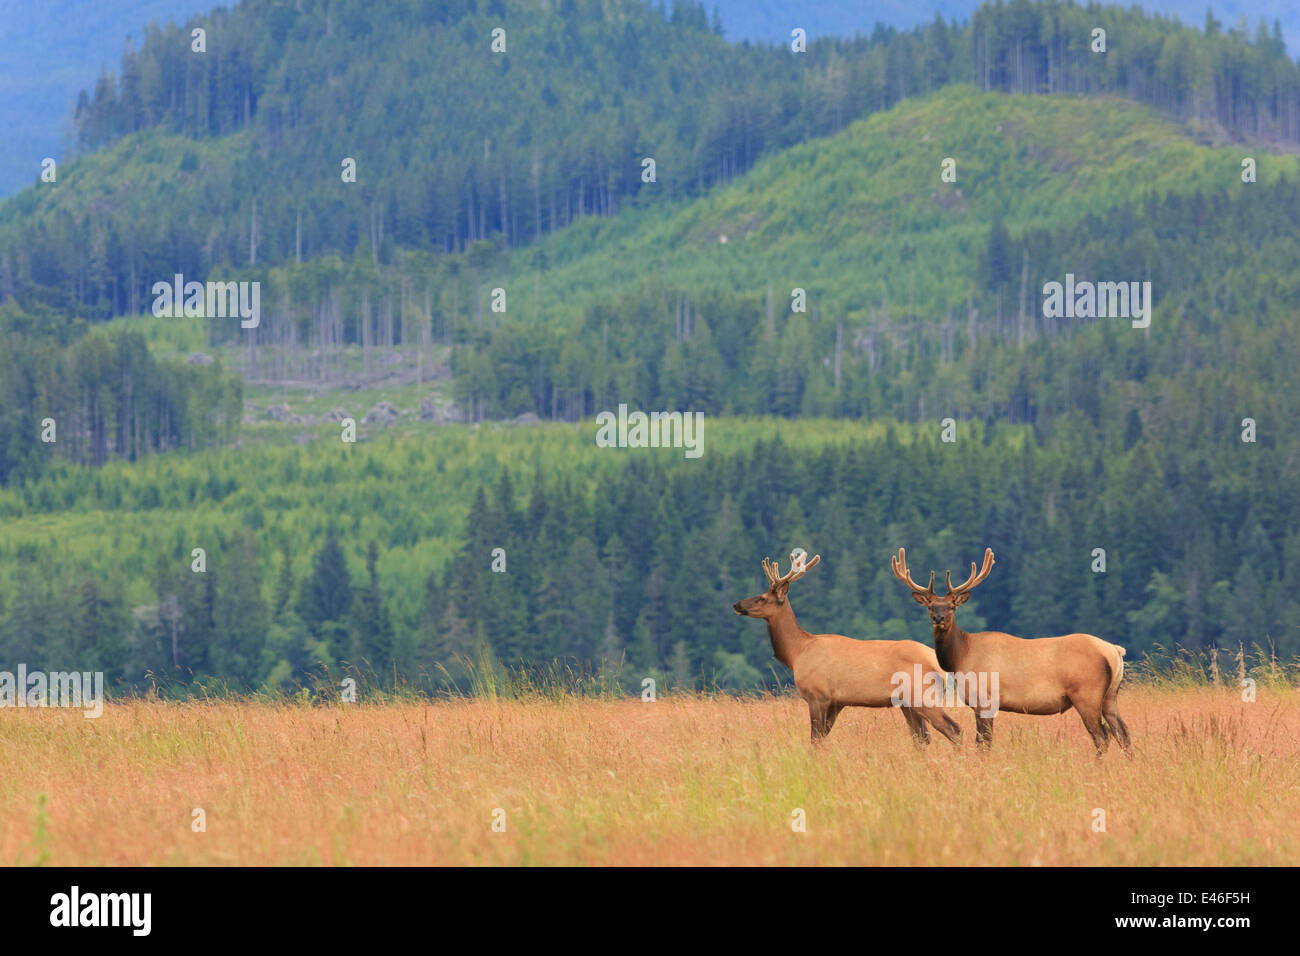 Roosevelt Elk in the wild on Vancouver Island, British Columbia. Stock Photo